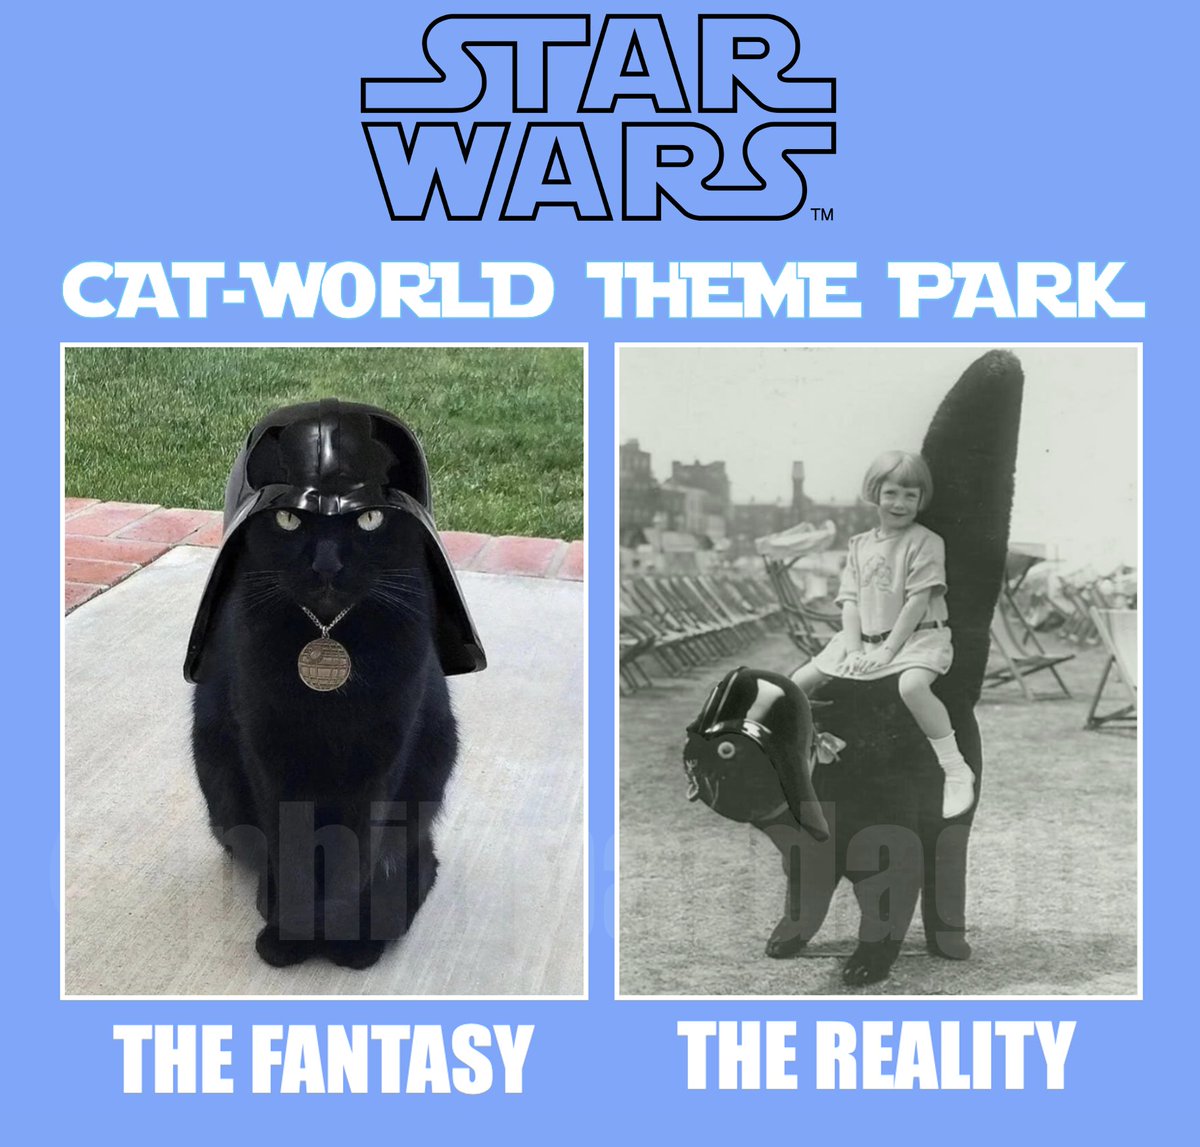 Oh, the anticipation! #StarWars #StarWarsUnlimited #cat #cats #catsofinstagram #CatsOfX #themepark #themeparks #DarthVader #darthvaderhelmet